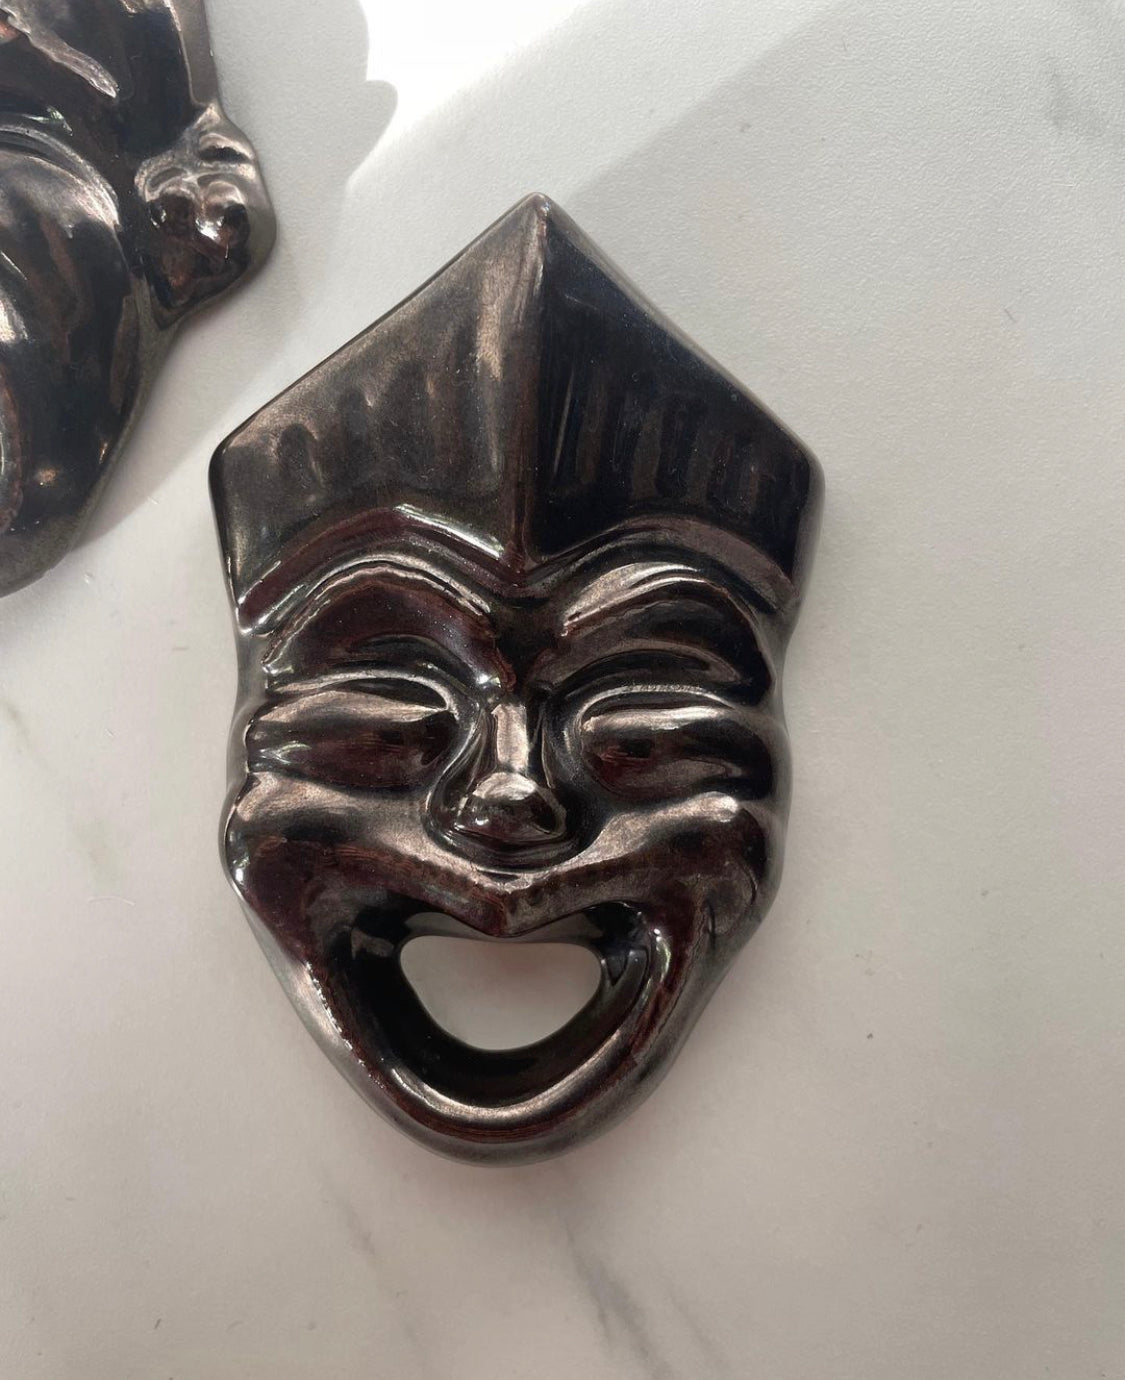 Pair of Sculpted Ceramic Joker Theater Masks